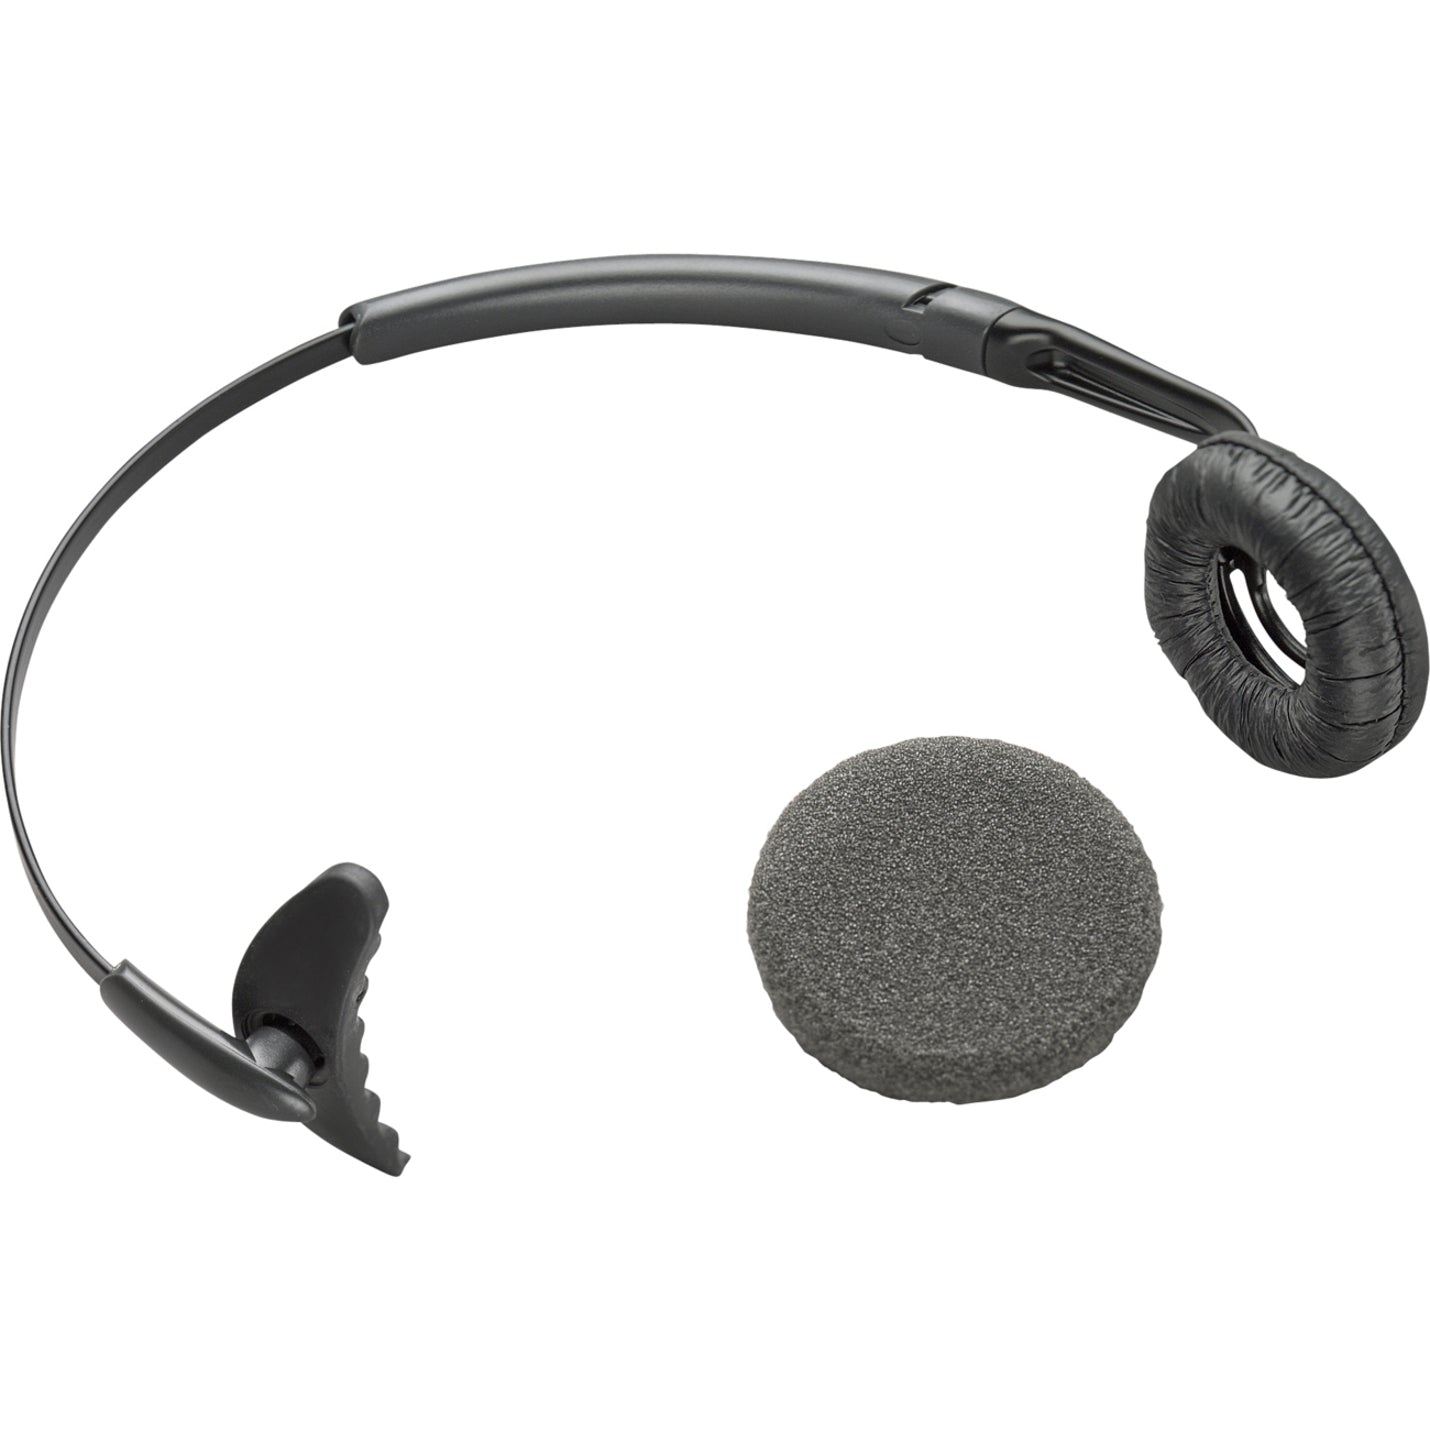 Plantronics 66735-01 Headband For Headsets Cs50 Cs55, Comfortable and Durable